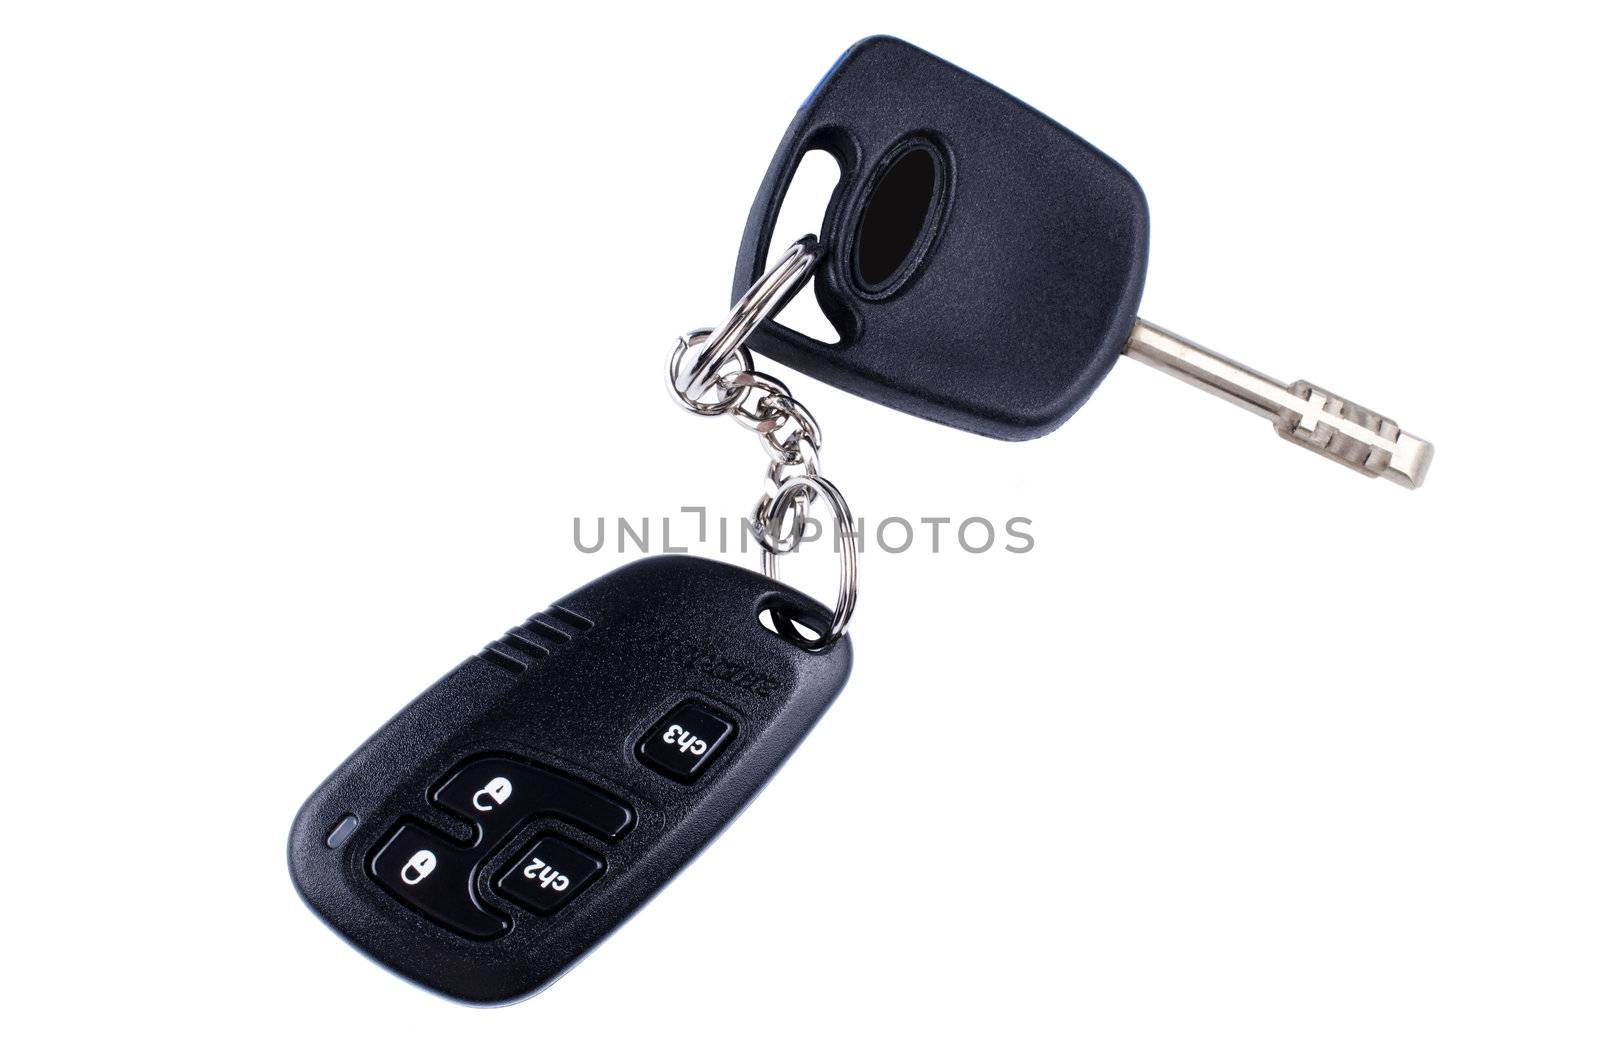 Remote car key isolated on white background